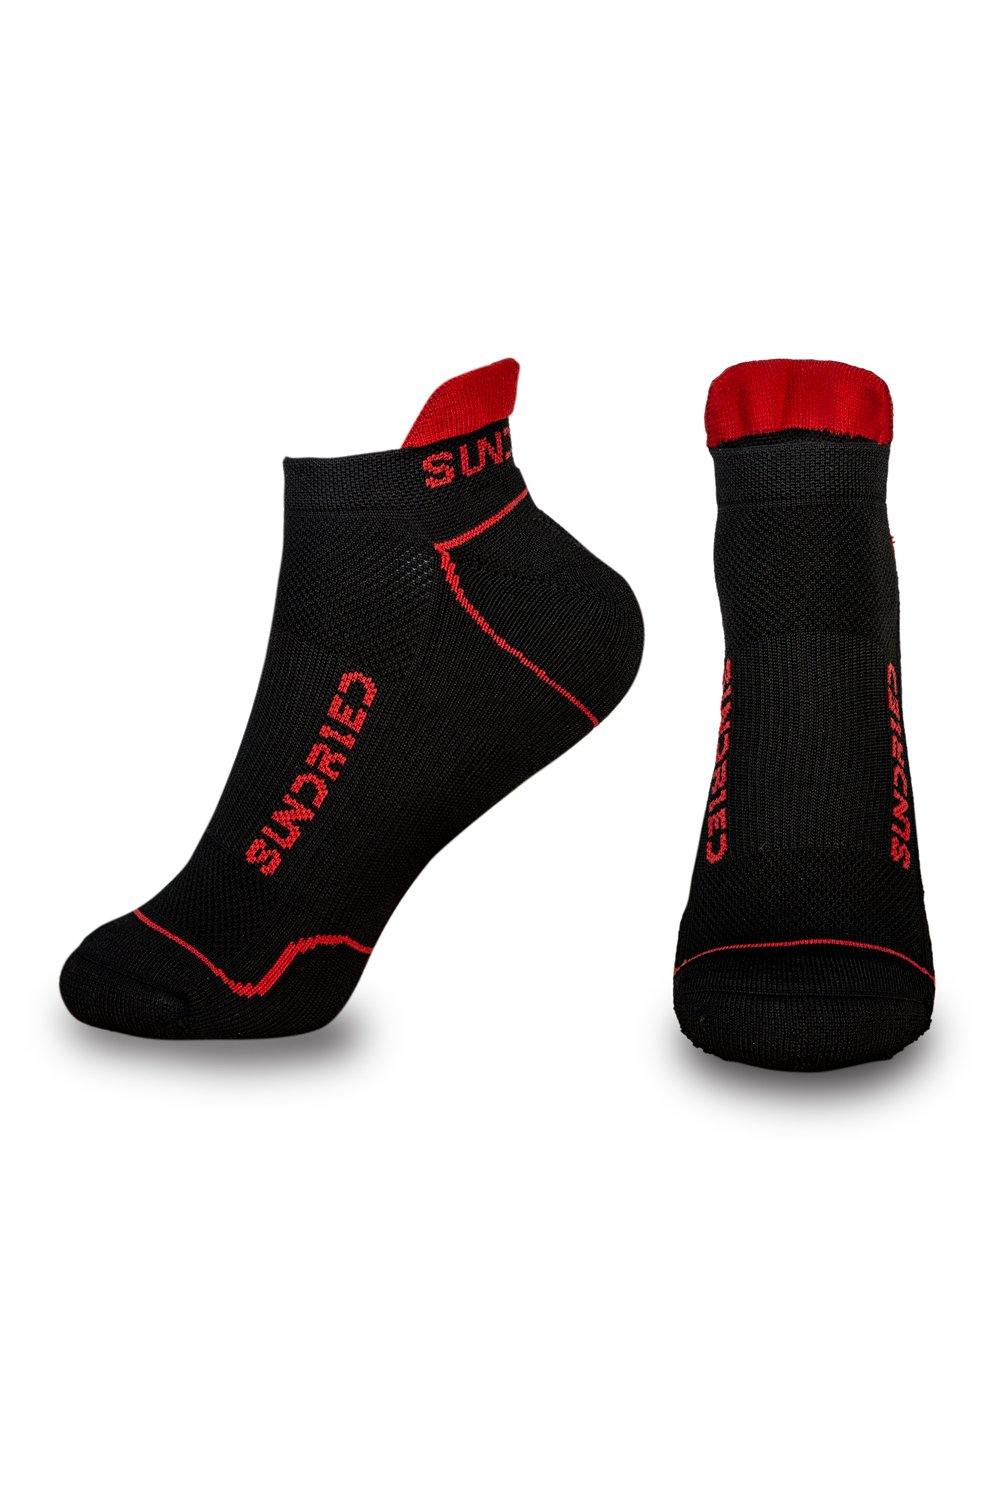 Sundried Recycled Run Socks Socks 39-43 Black SD0319 39-43 Black Activewear